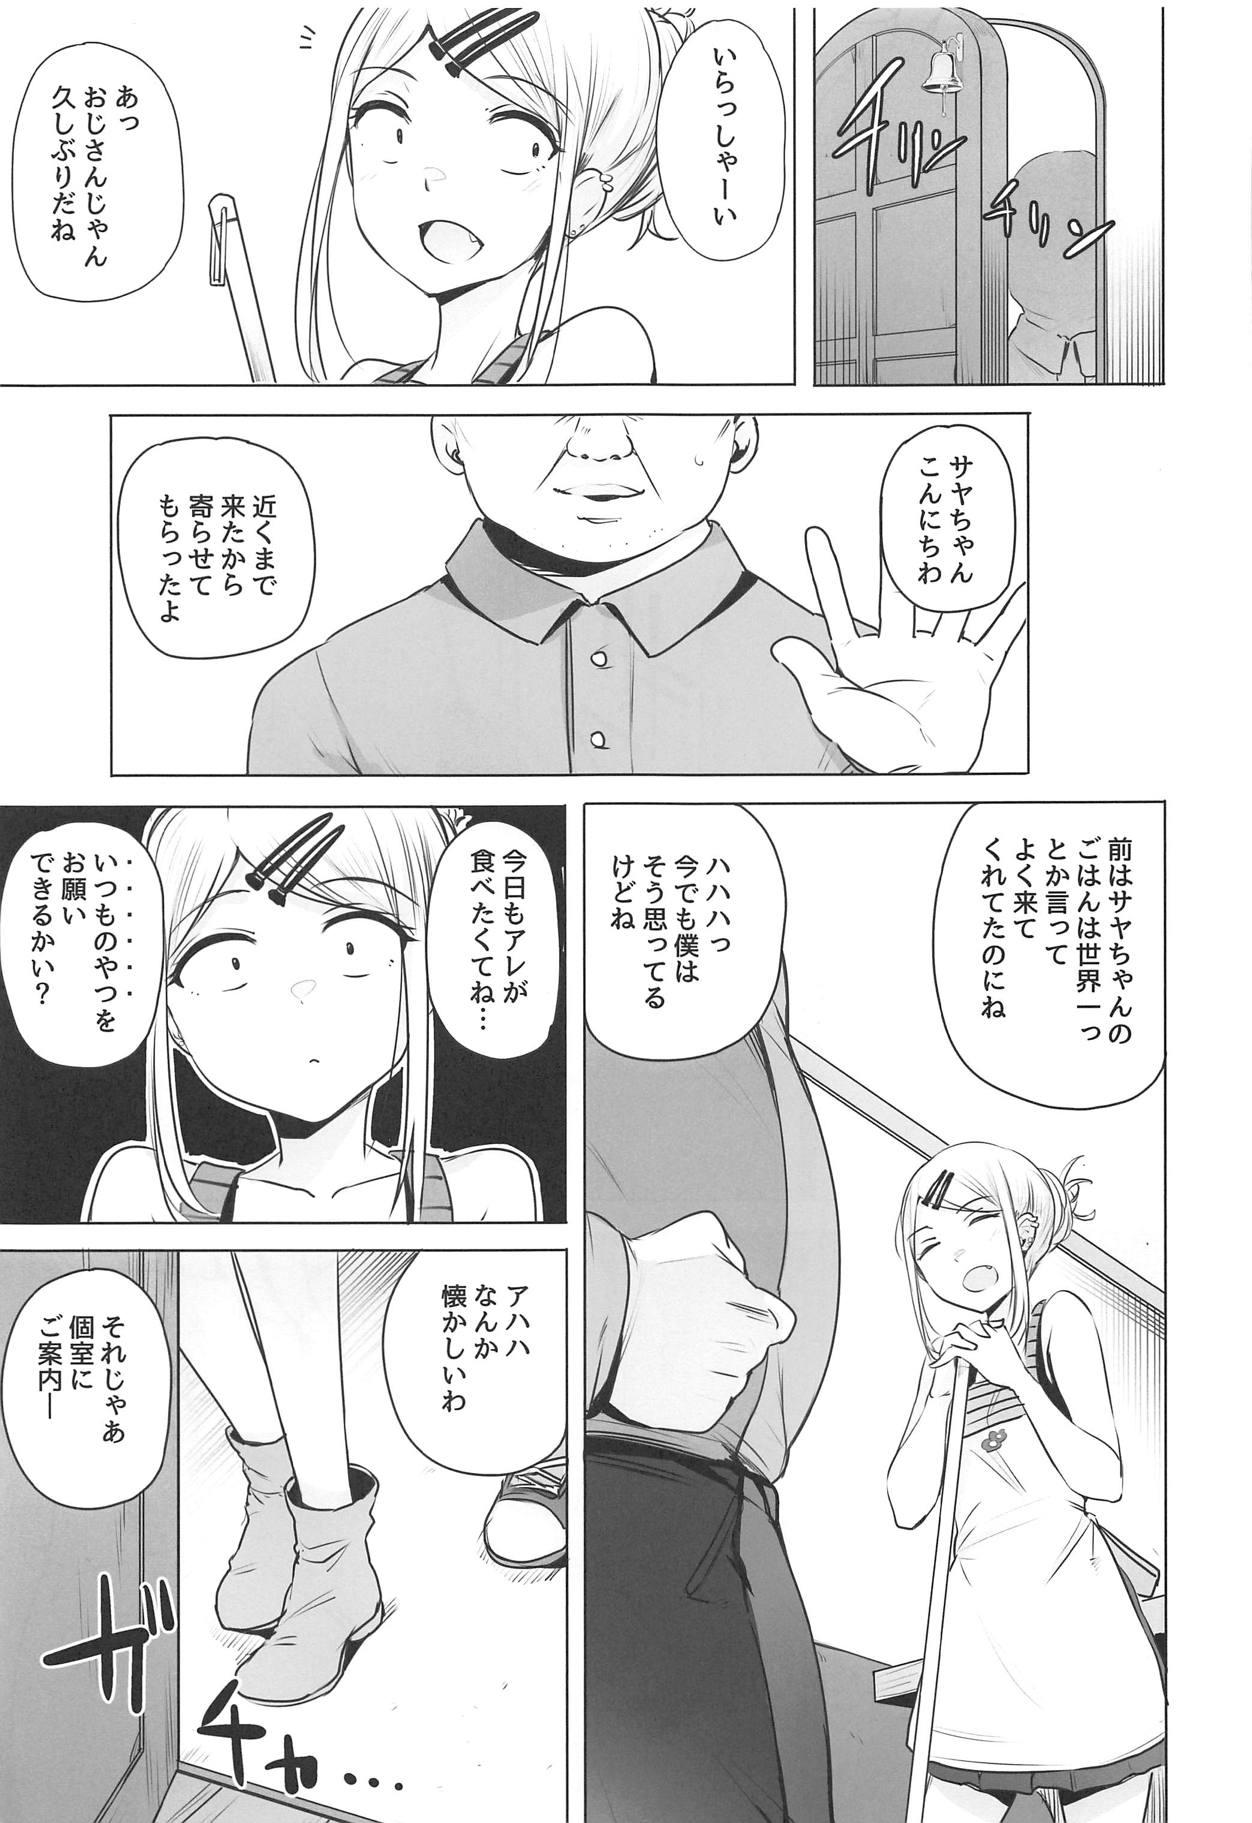 Chudai Saya-chan no ga Ichiban Oishii - Dagashi kashi Indoor - Page 3